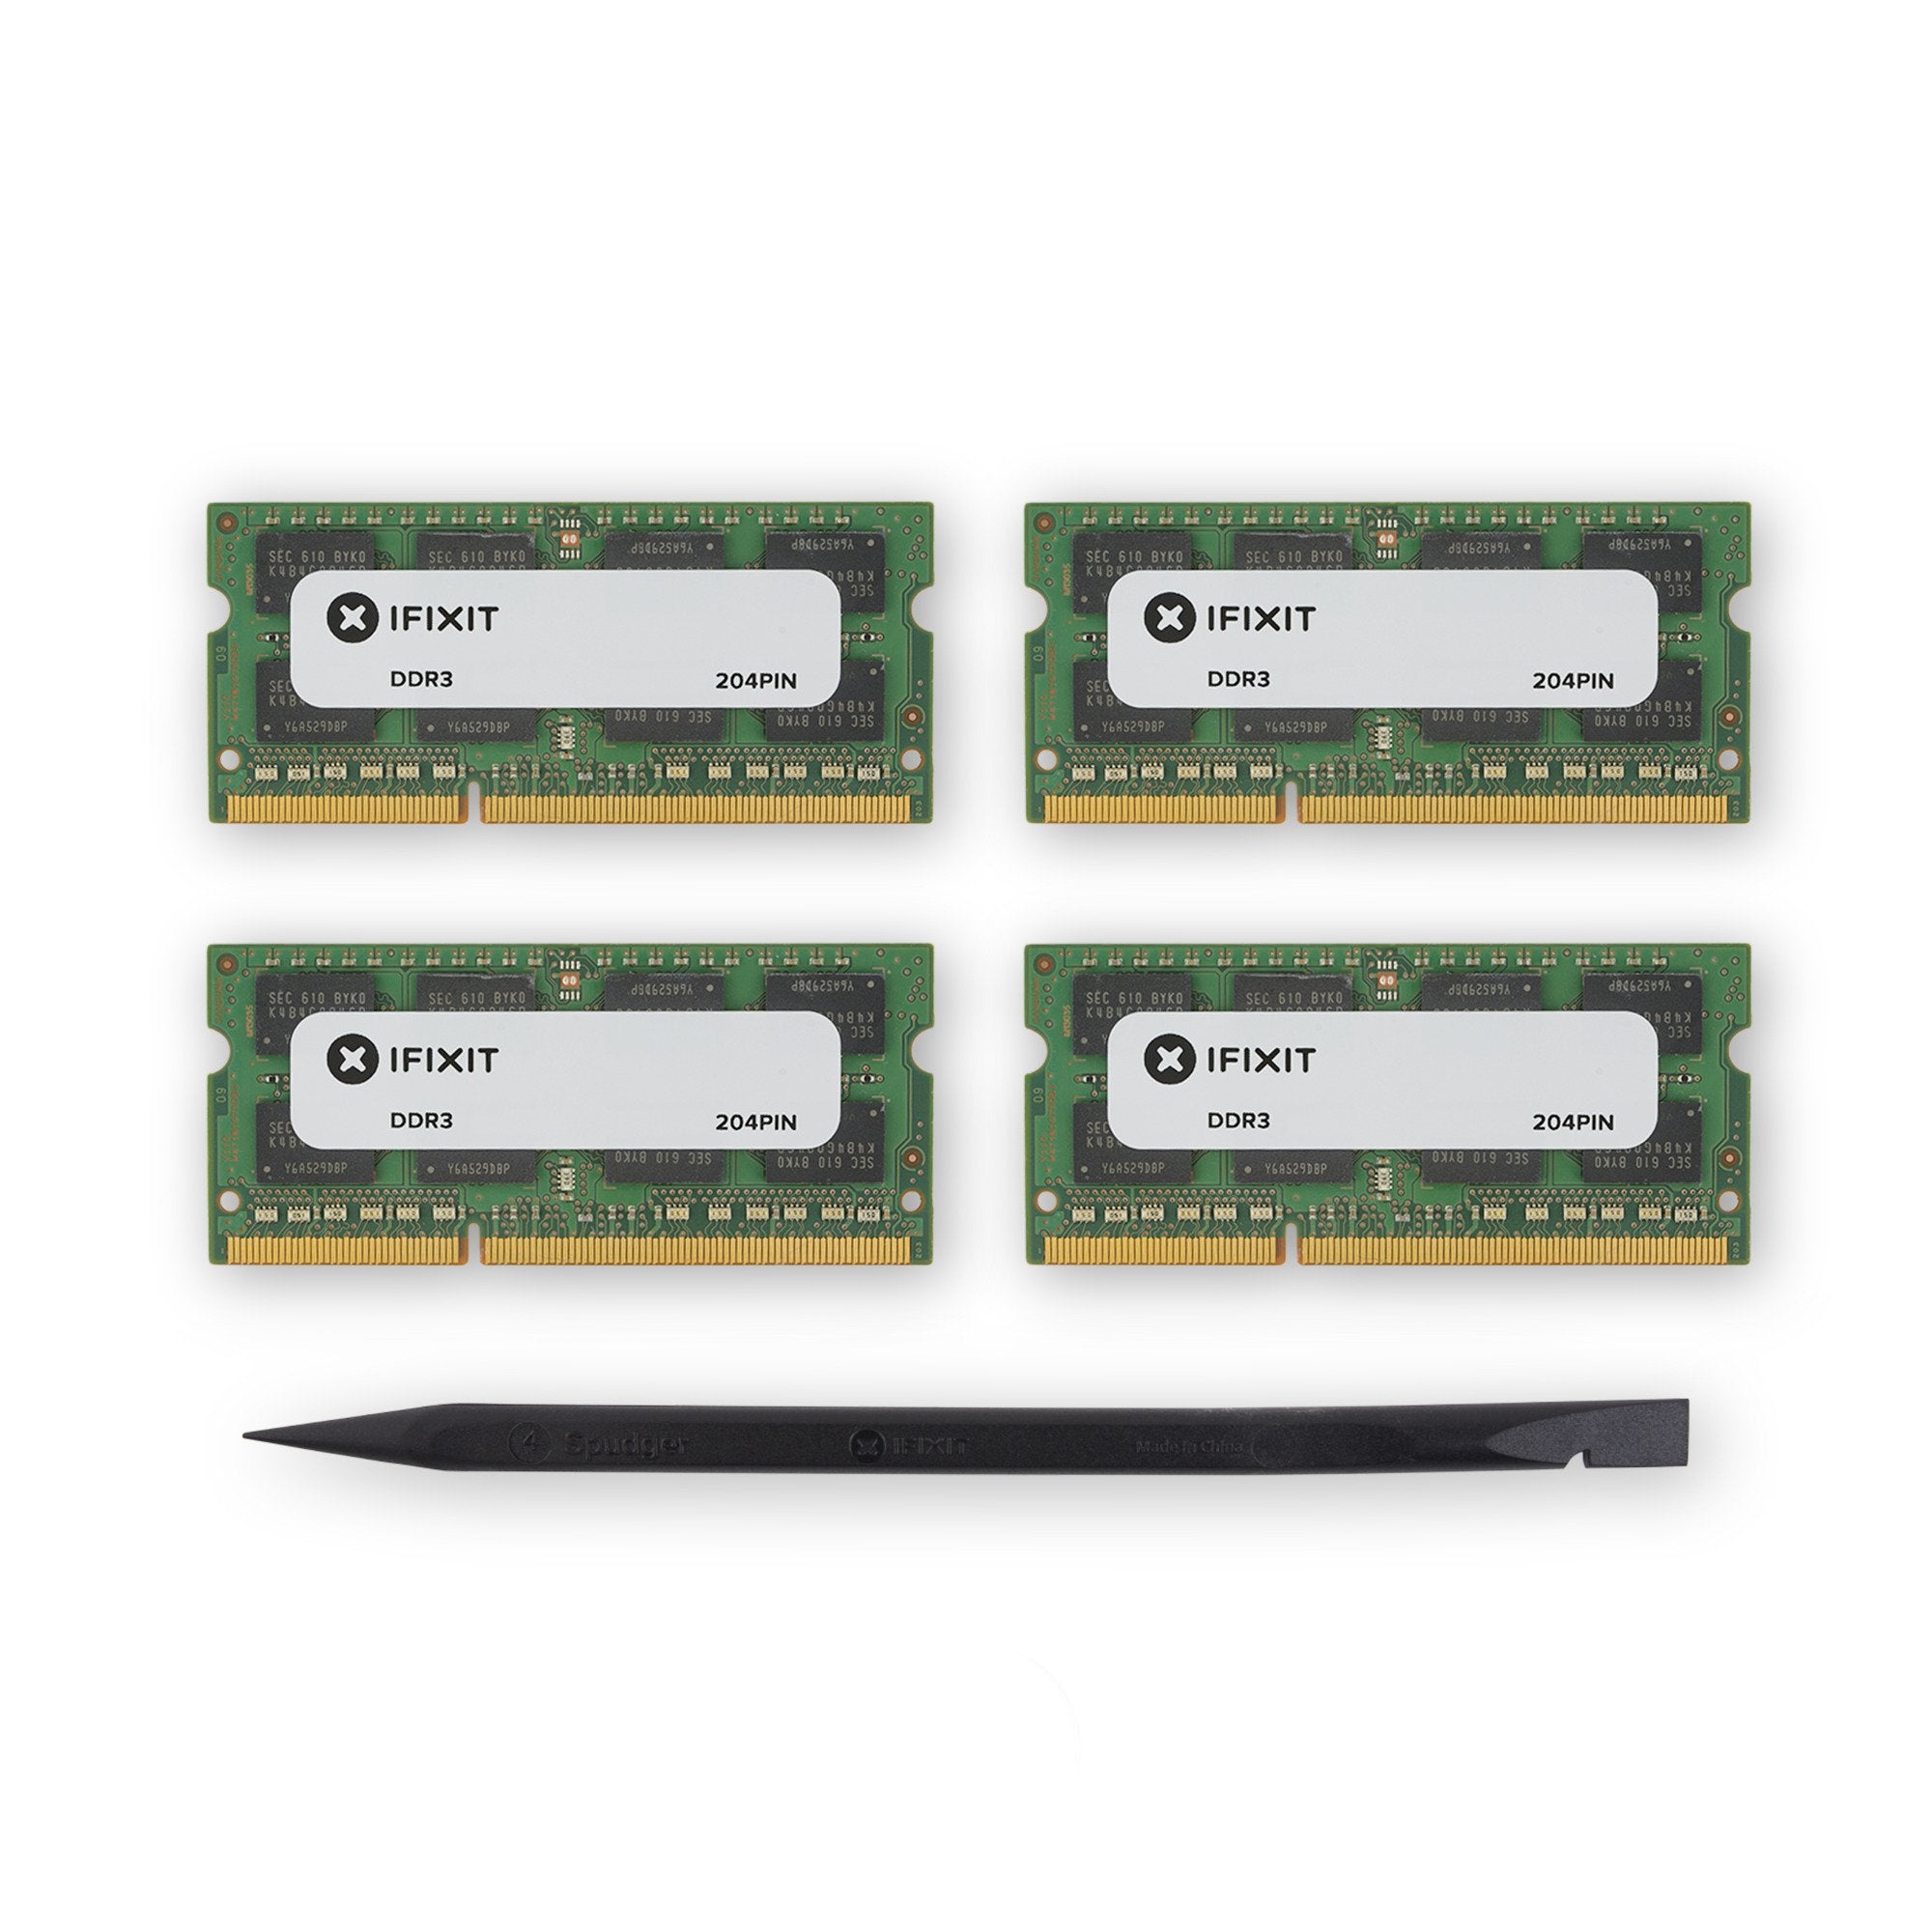 iMac Intel 27" EMC 2639 (Late 2013) Memory Maxxer RAM Upgrade Kit New